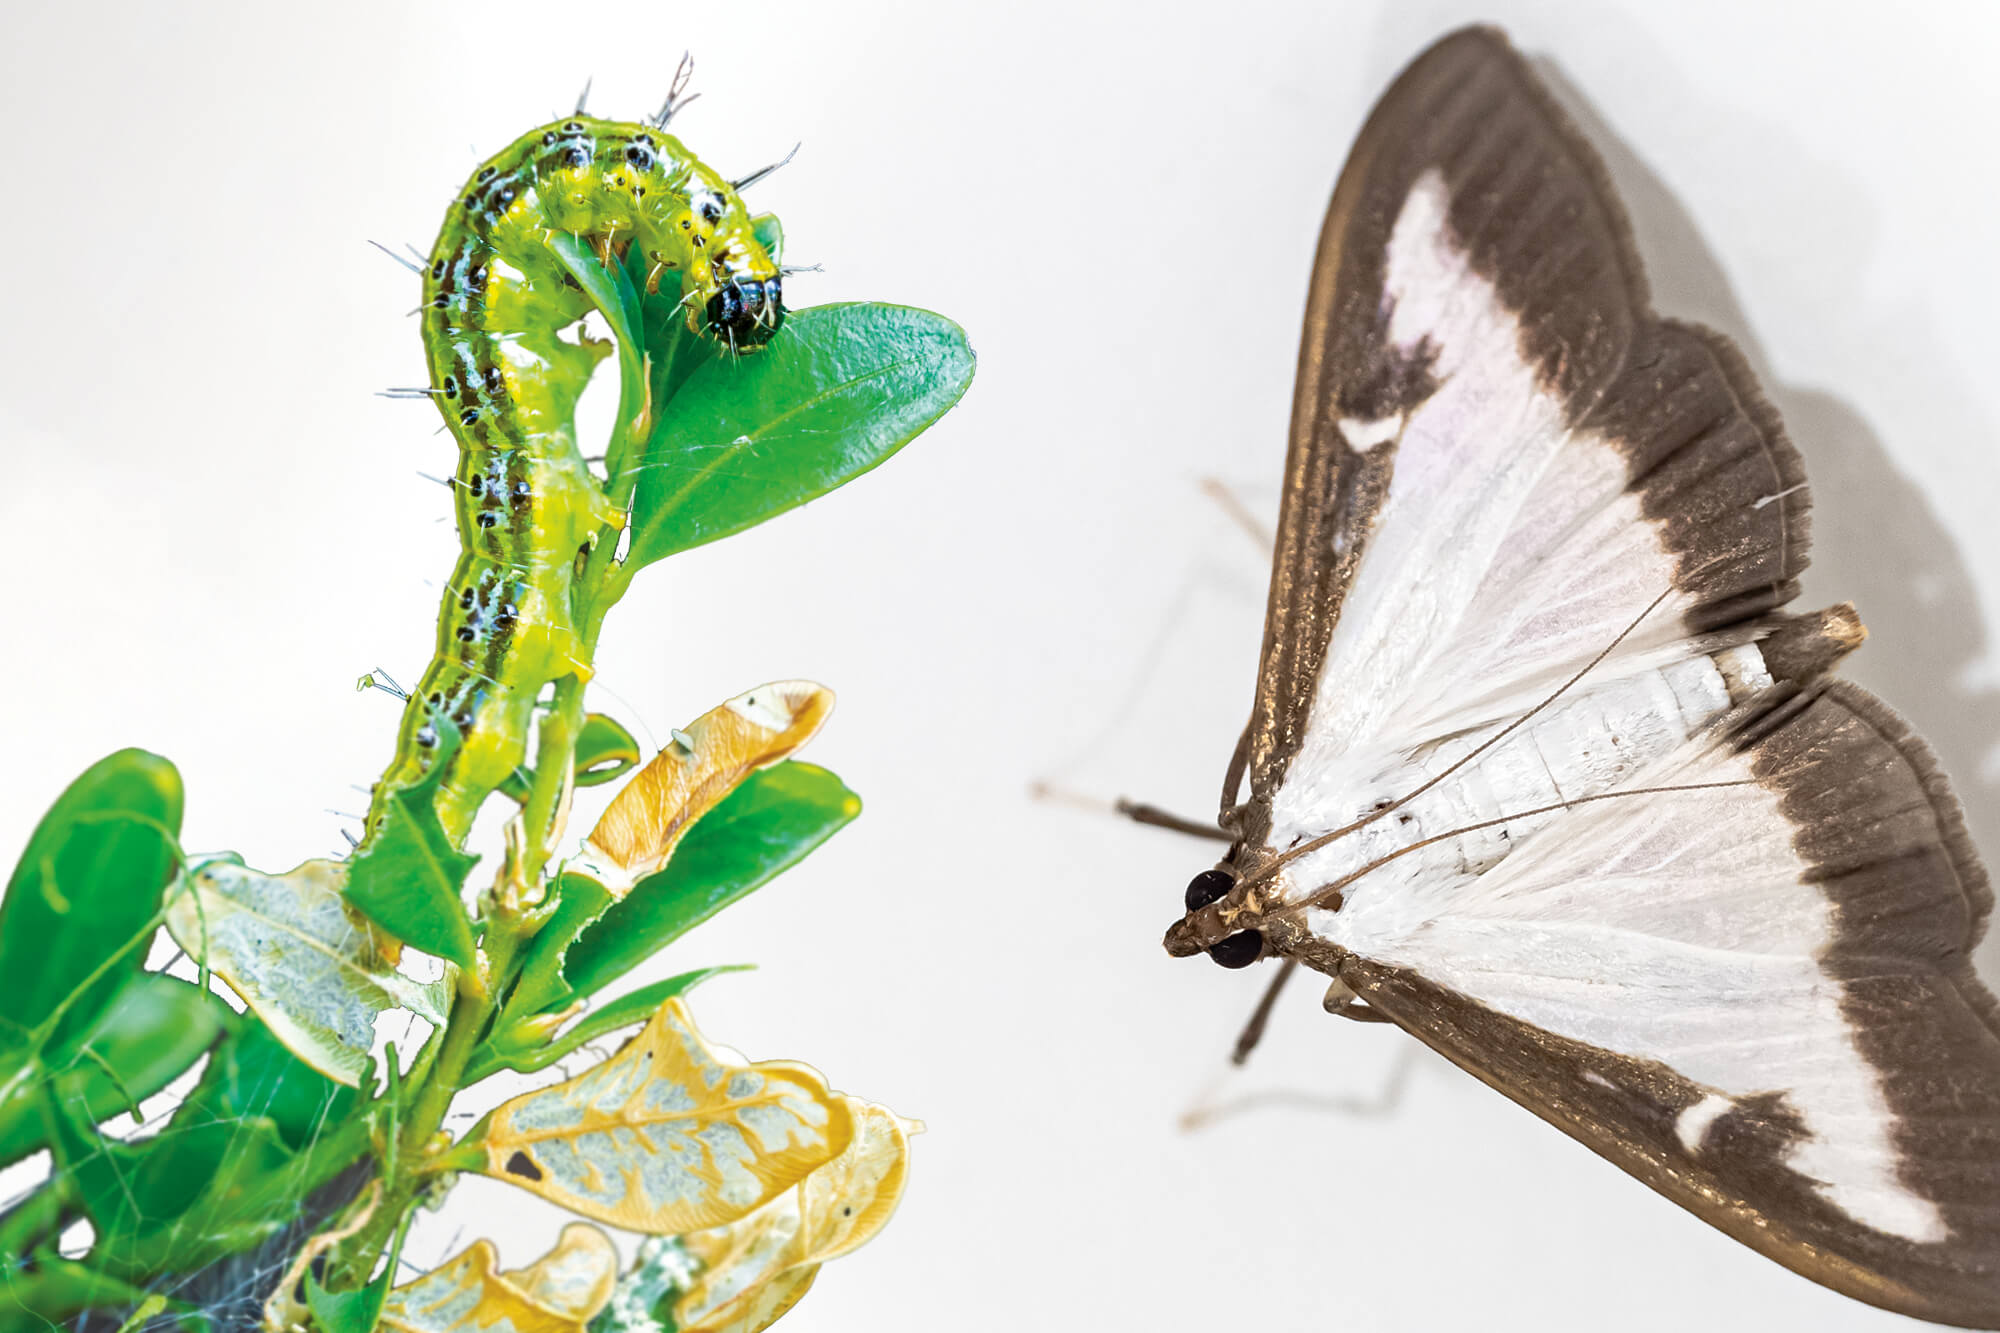 box tree moth caterpillar and adult